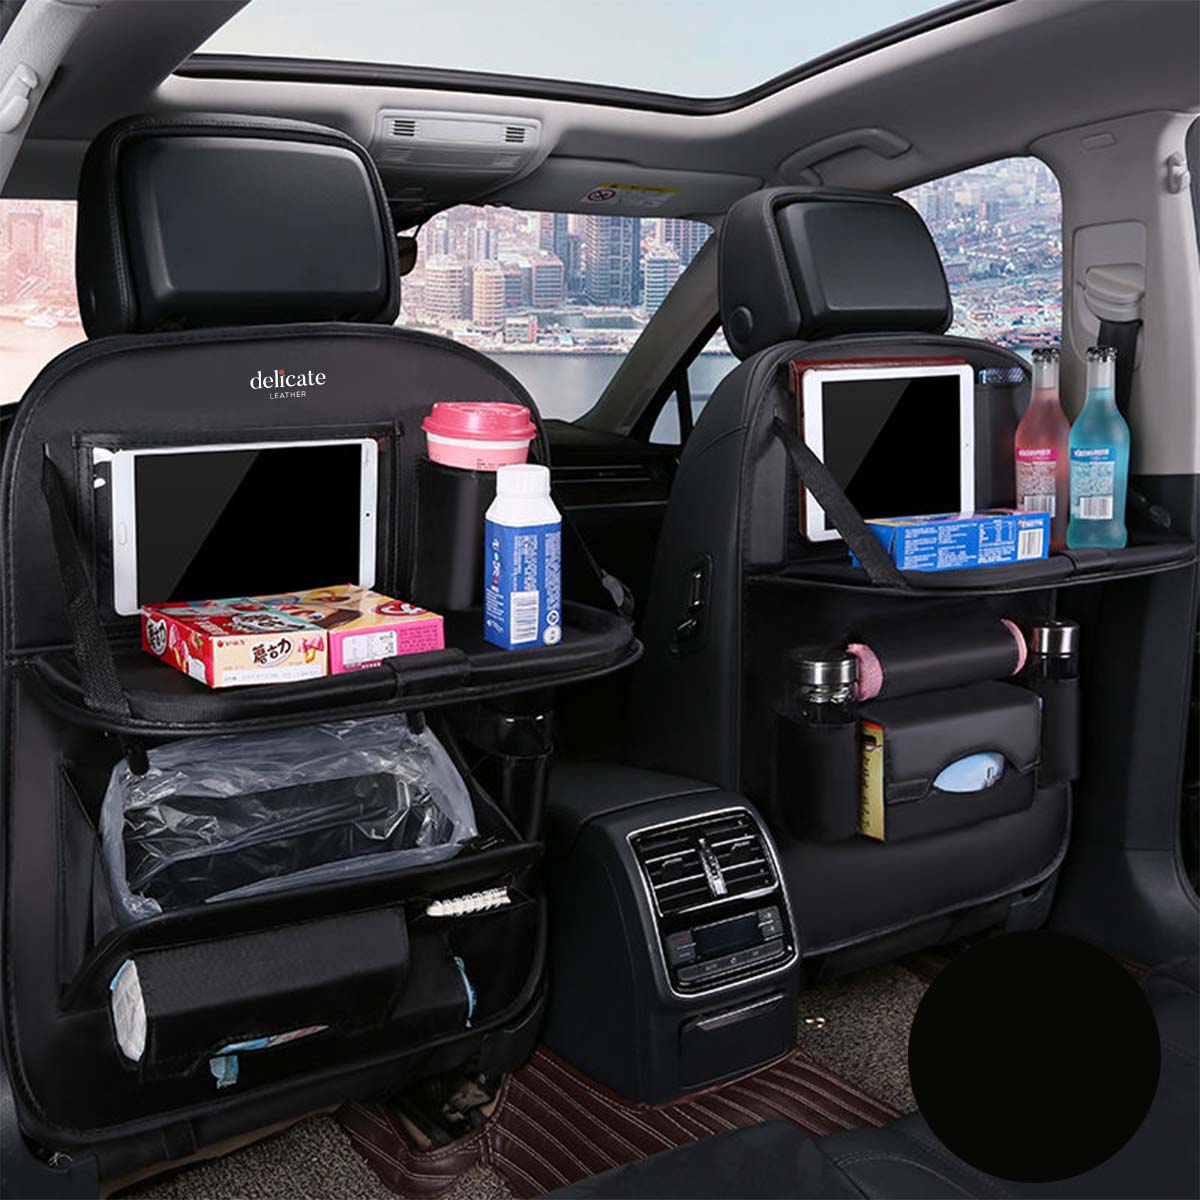 Subaru Backseat Truck Organizer: Maximize Space and Organization